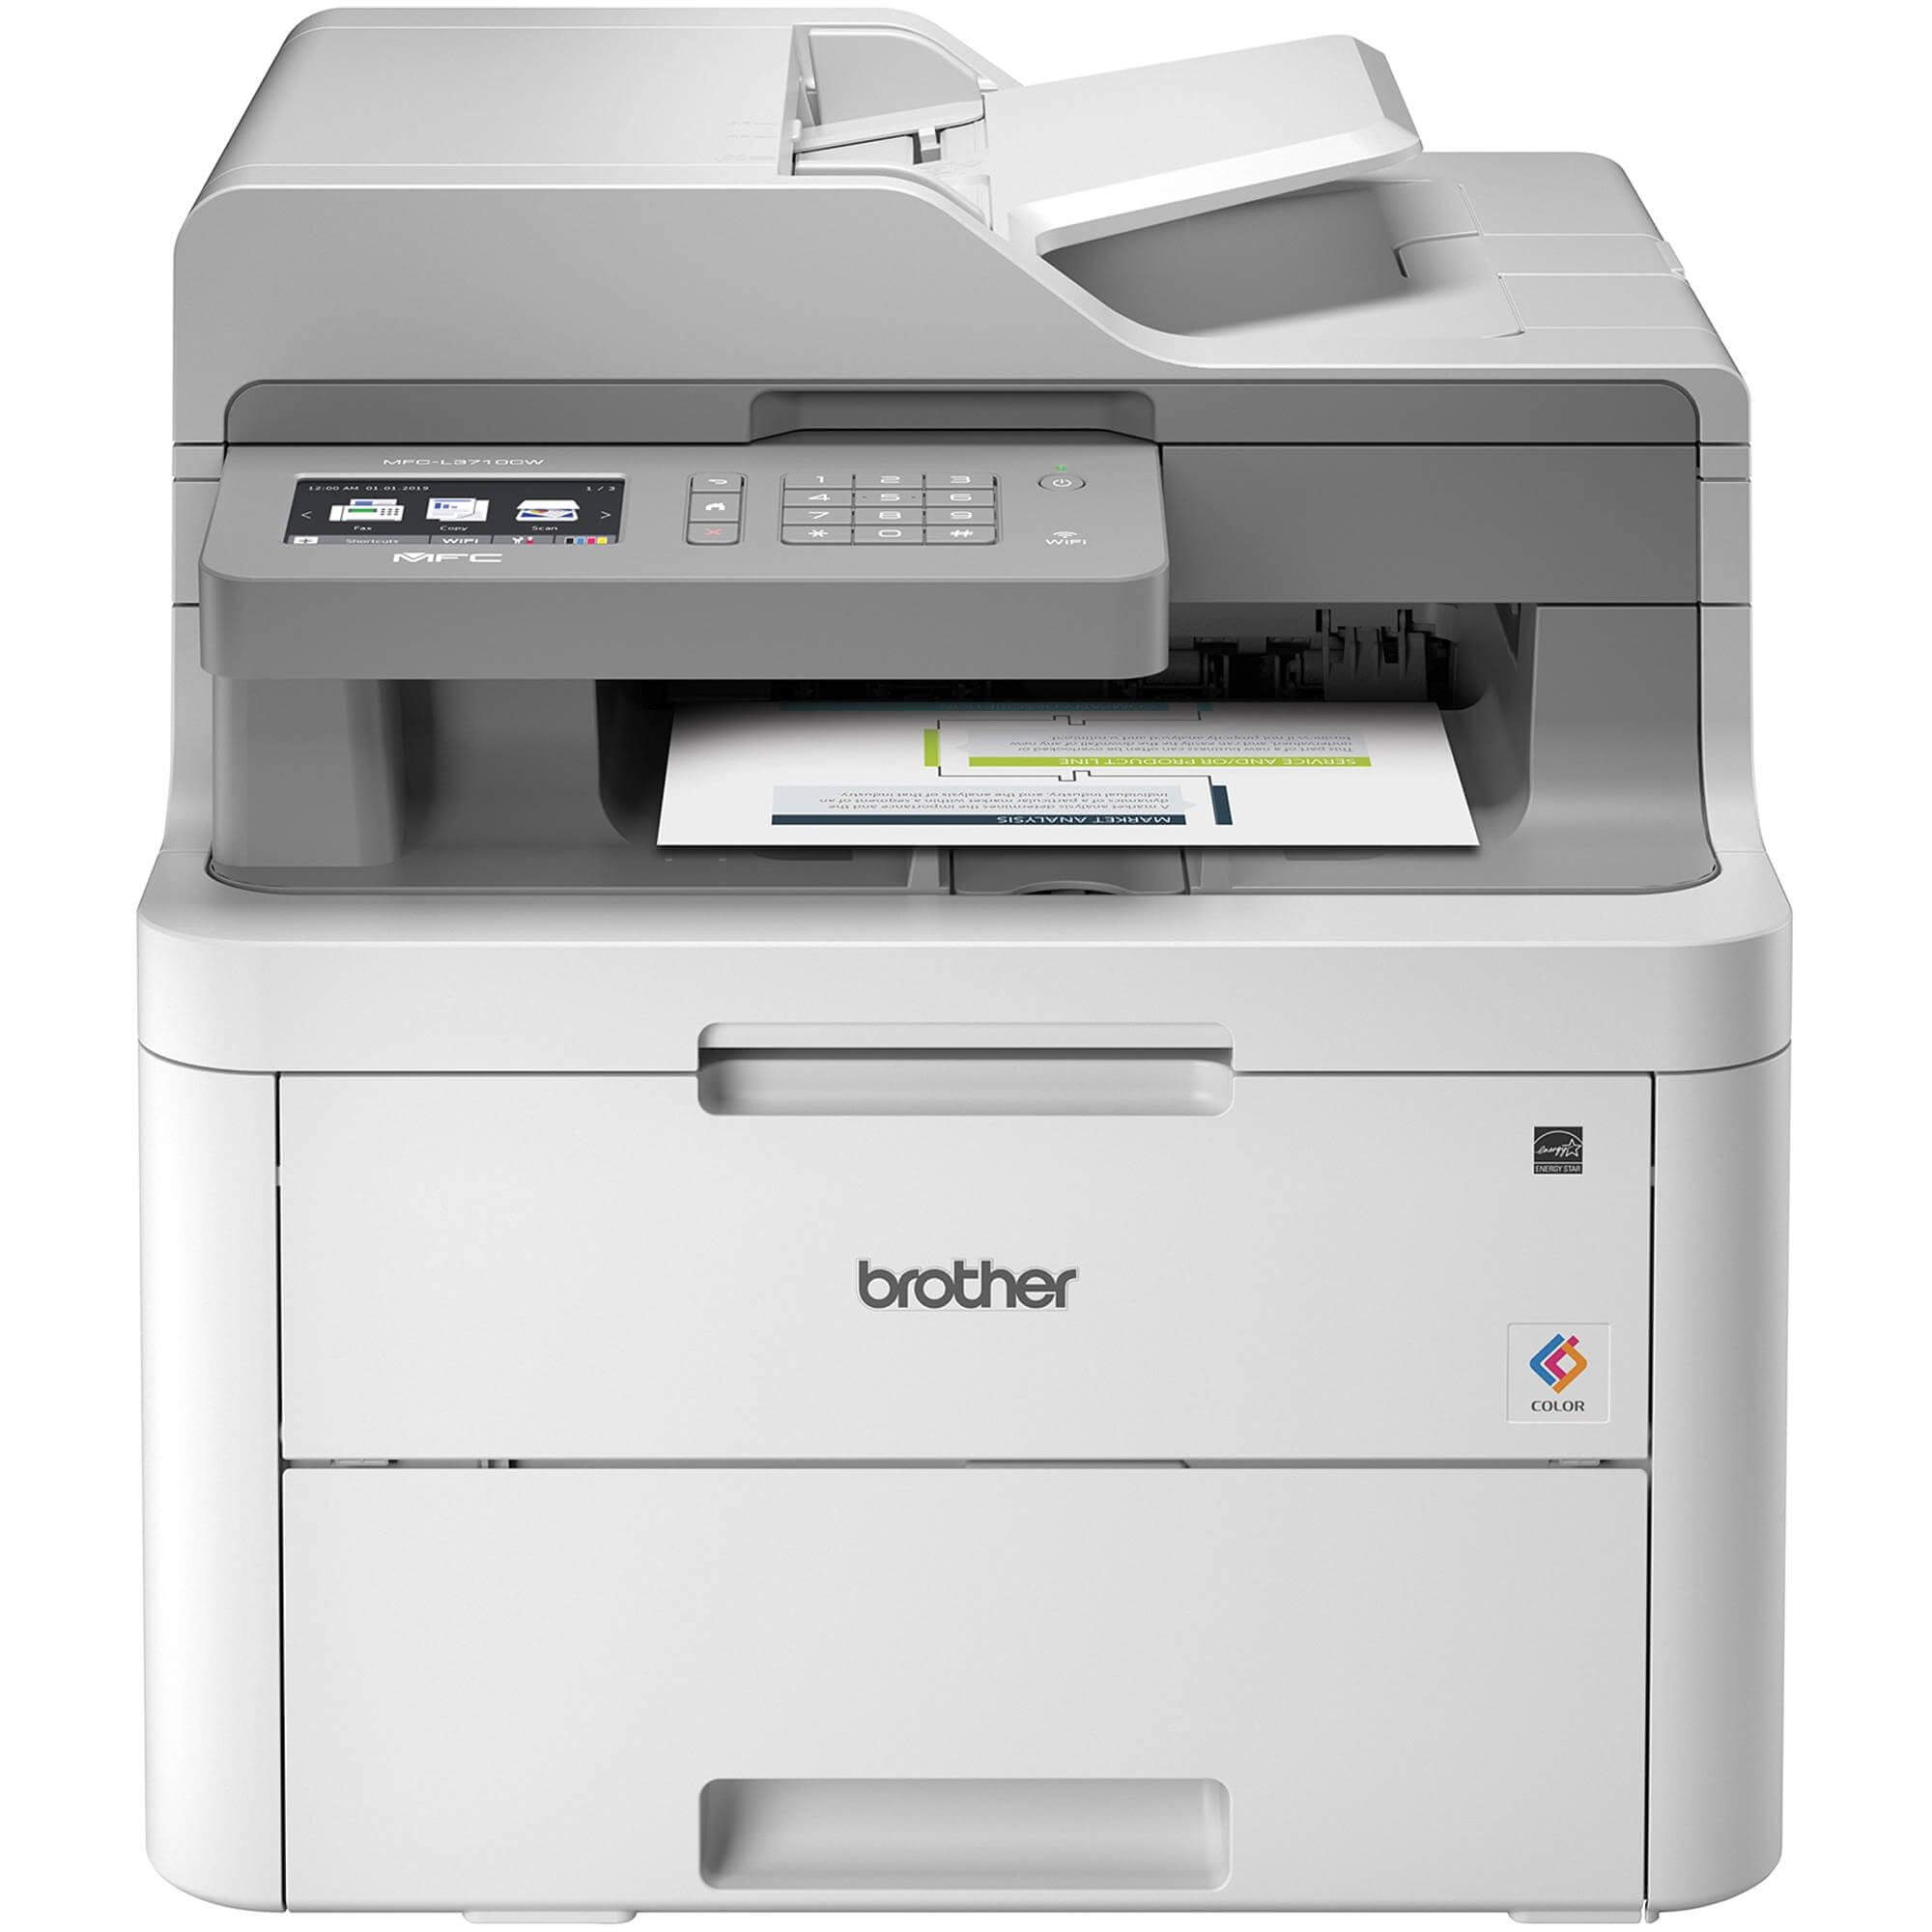 Brother Color Wireless Copier Printer Fax Toner Parts